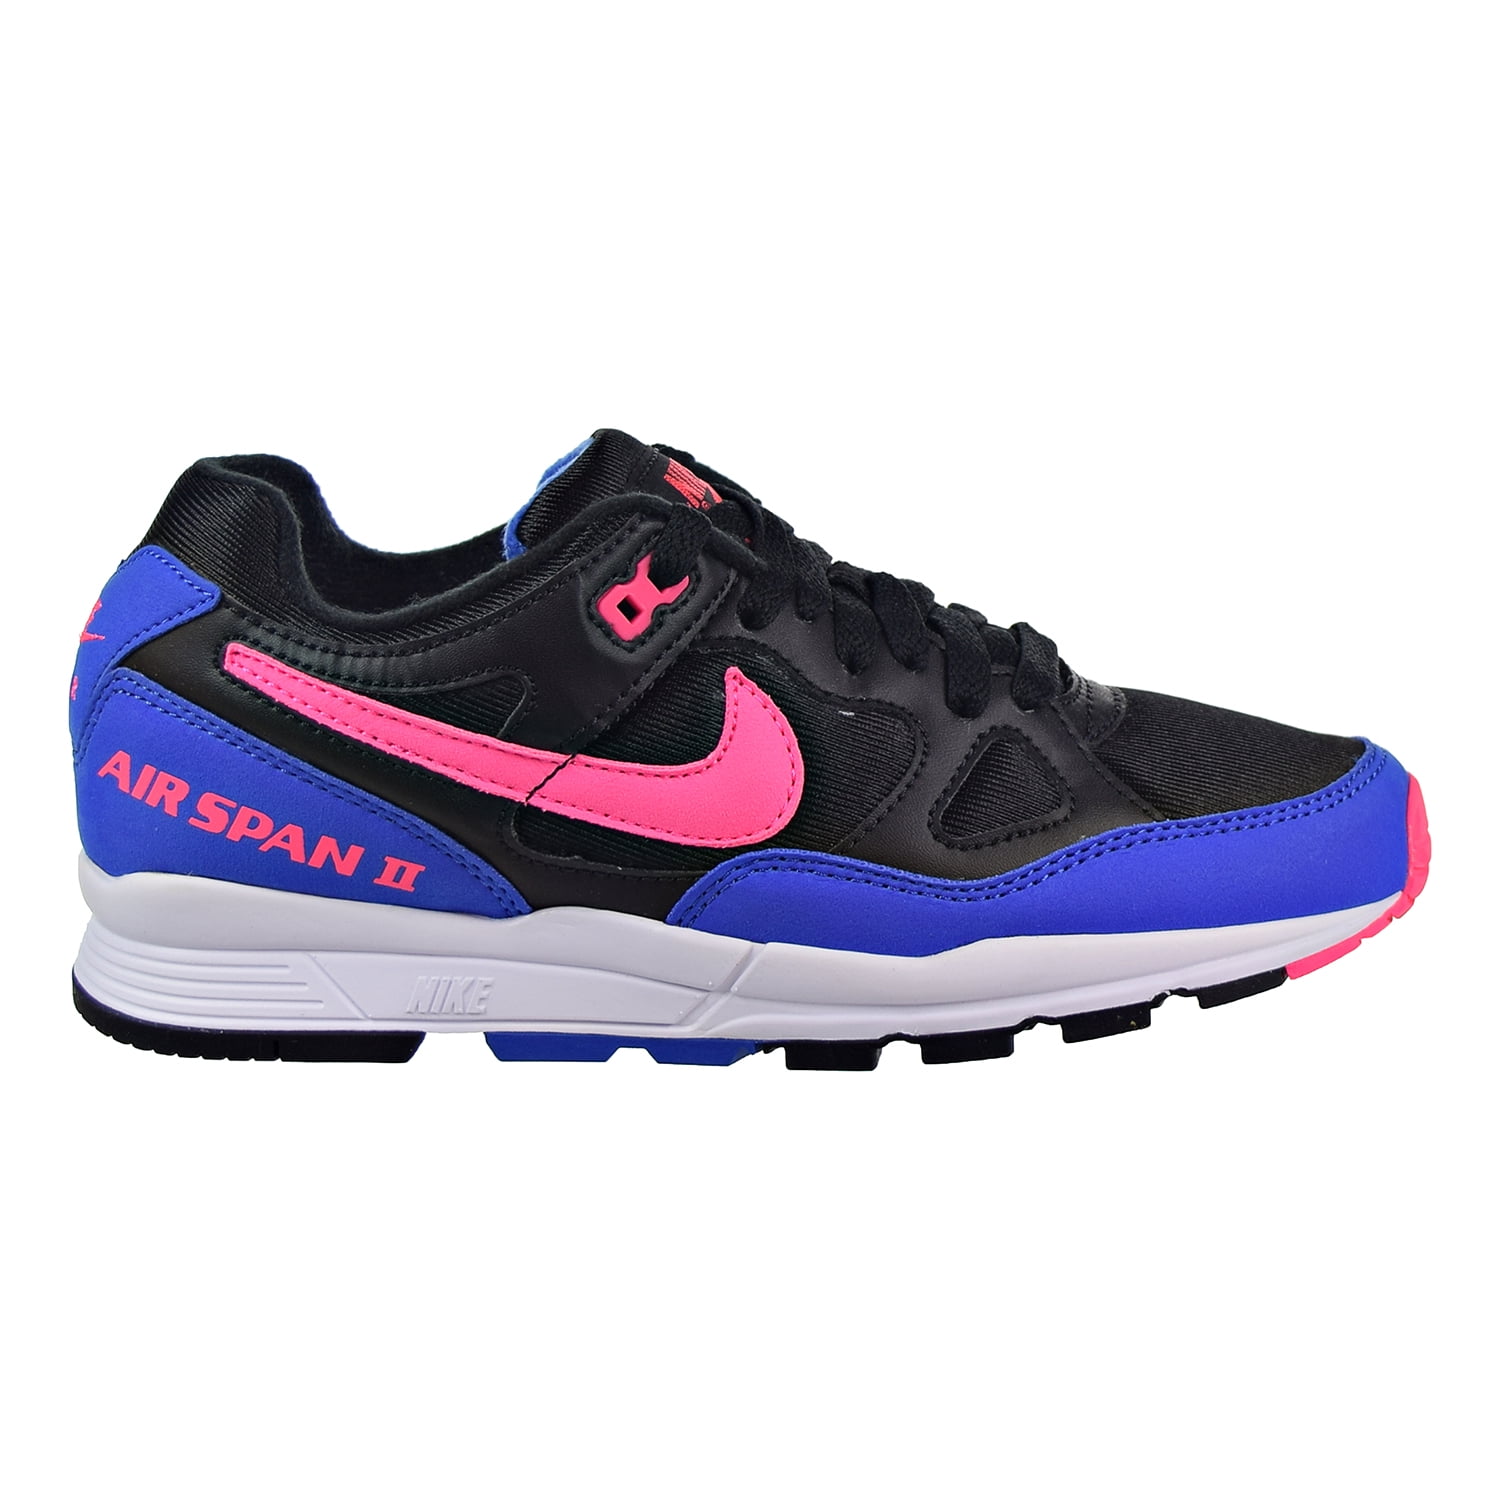 Nike Air Span II Men's Shoes Pink/Hyper Royal ah8047-003 (5.5 D(M) US) - Walmart.com